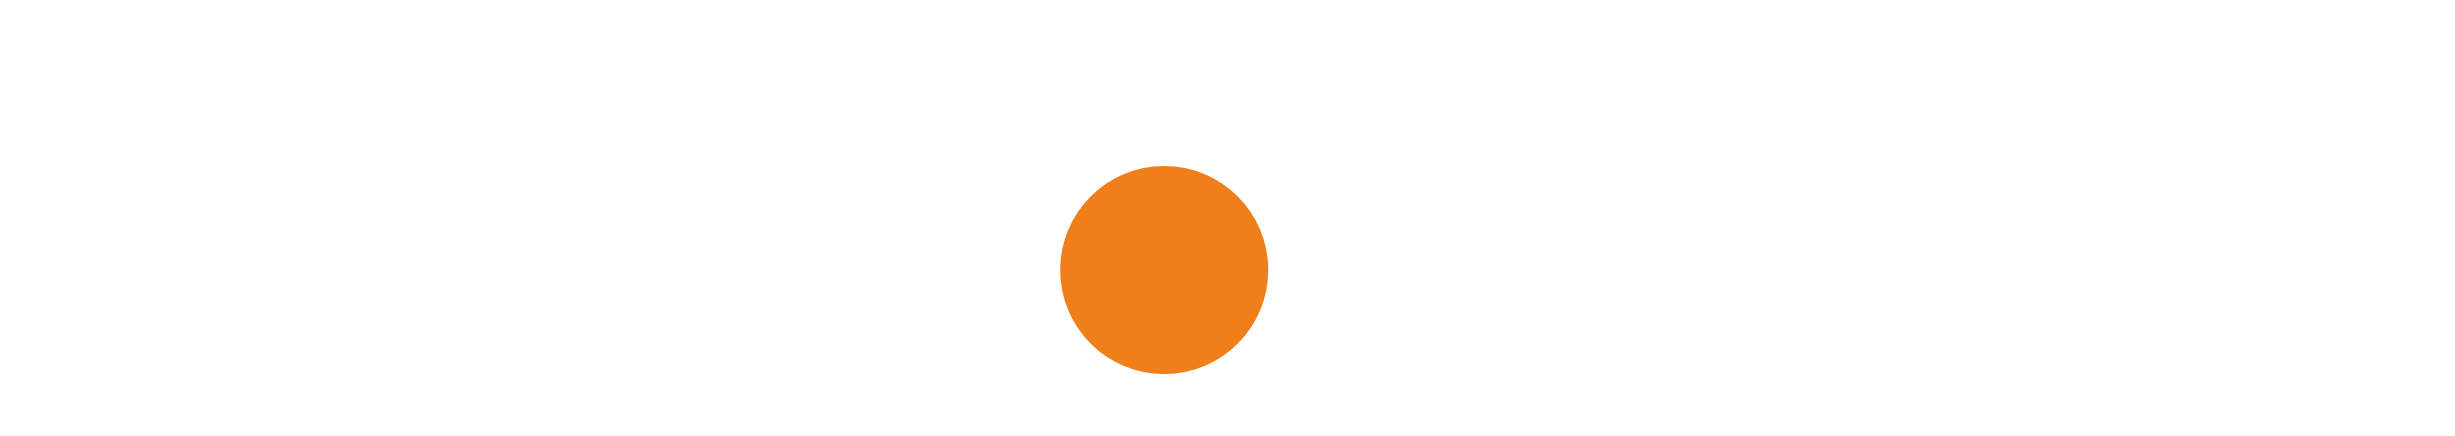 Logo meteopoint bianco